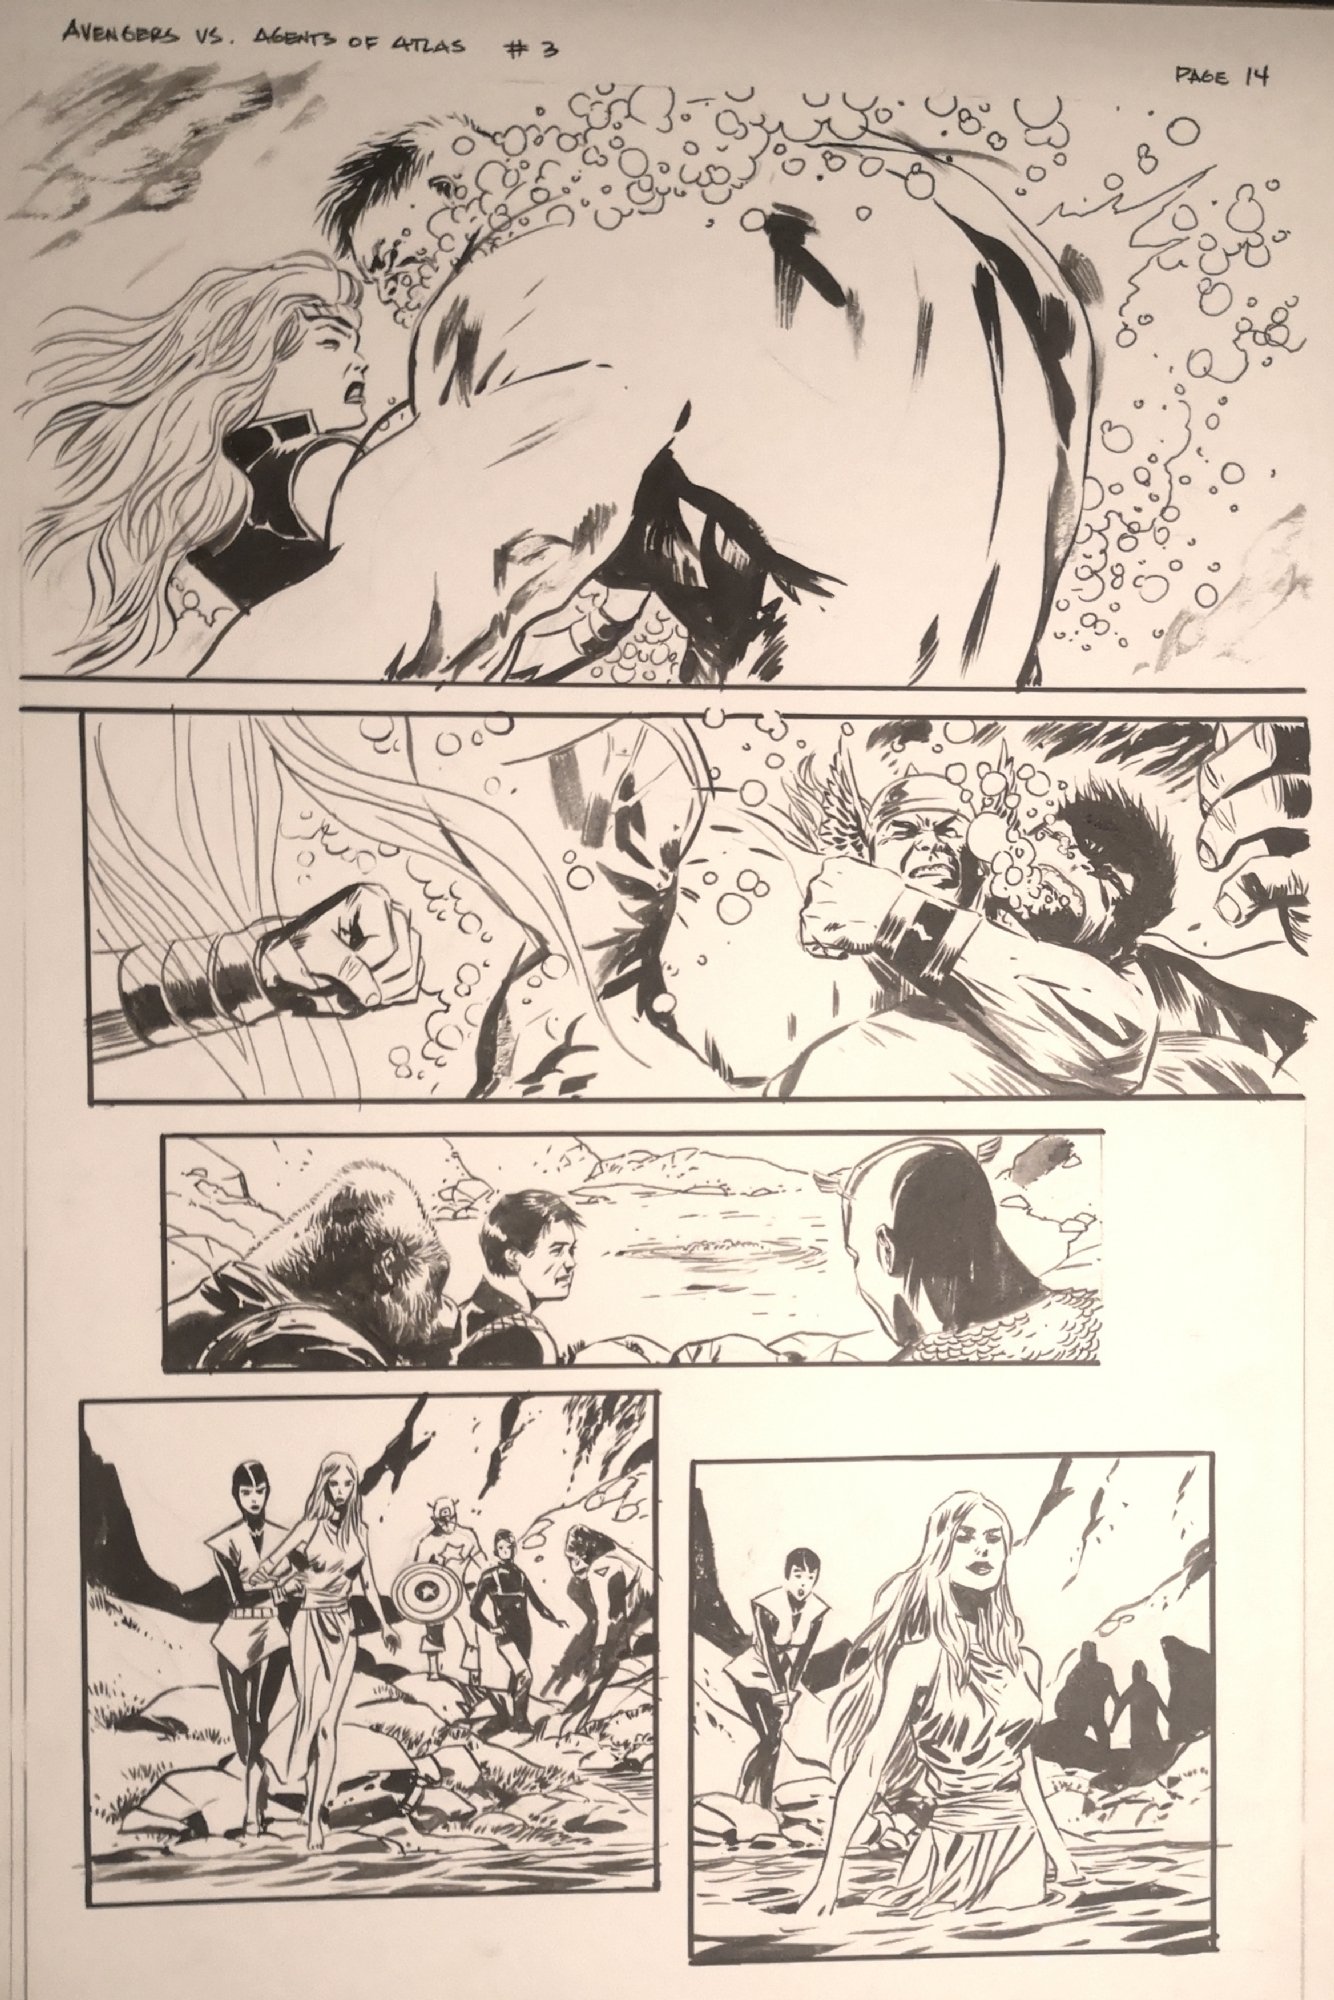 Avengers vs Atlas 3 page 14 (Thor), in Sheldon Walsh's Thor Comic Art ...